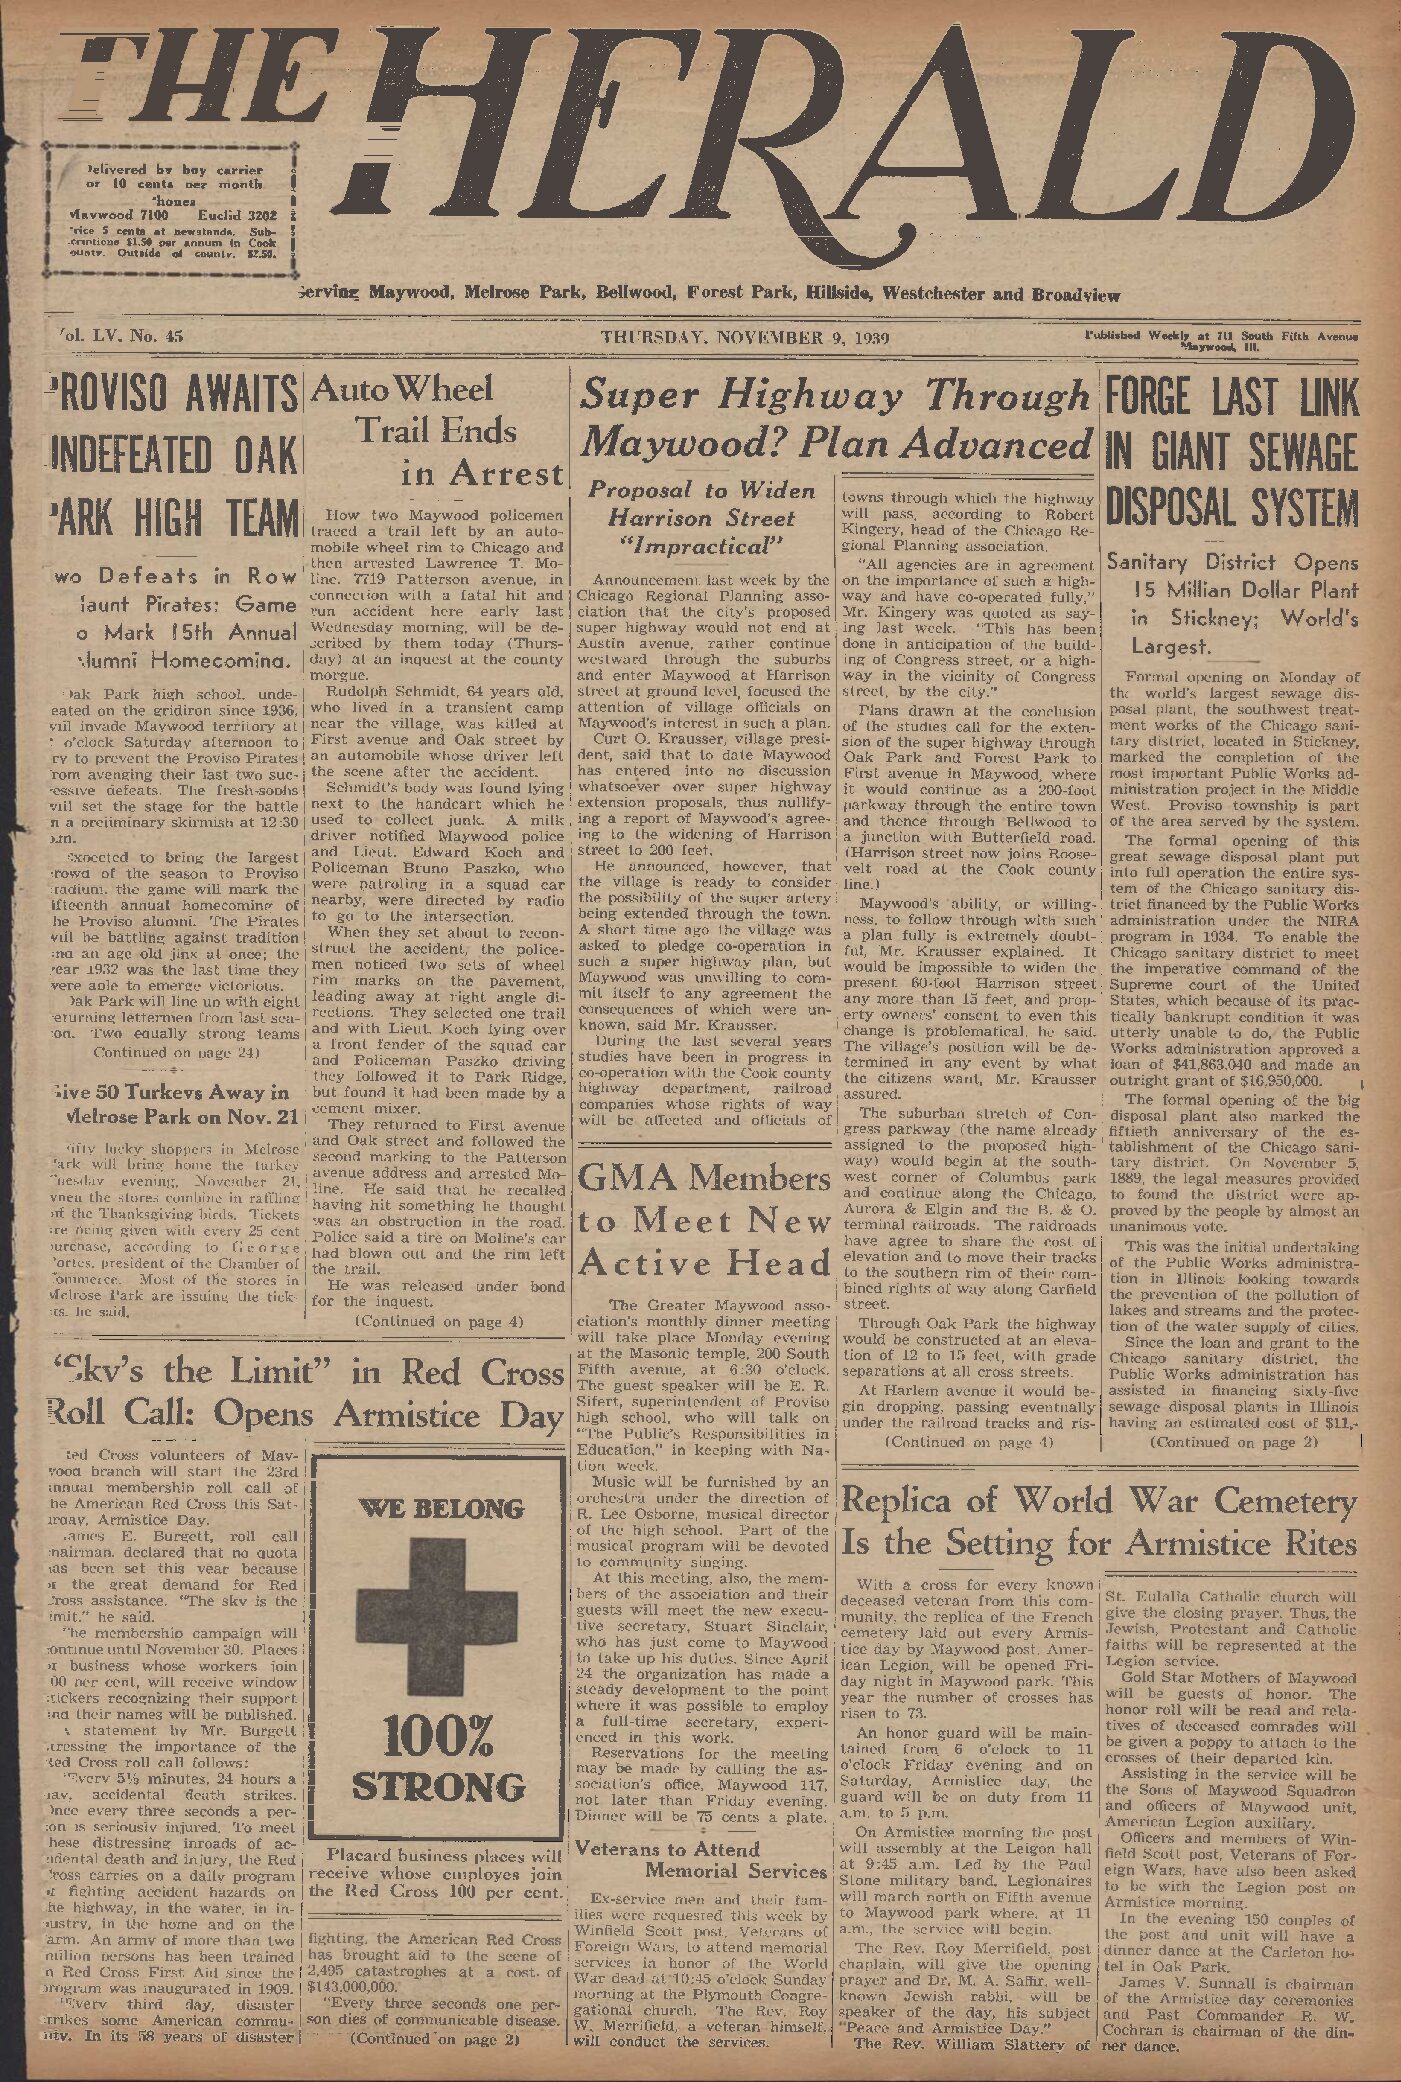 The Herald – 19391109